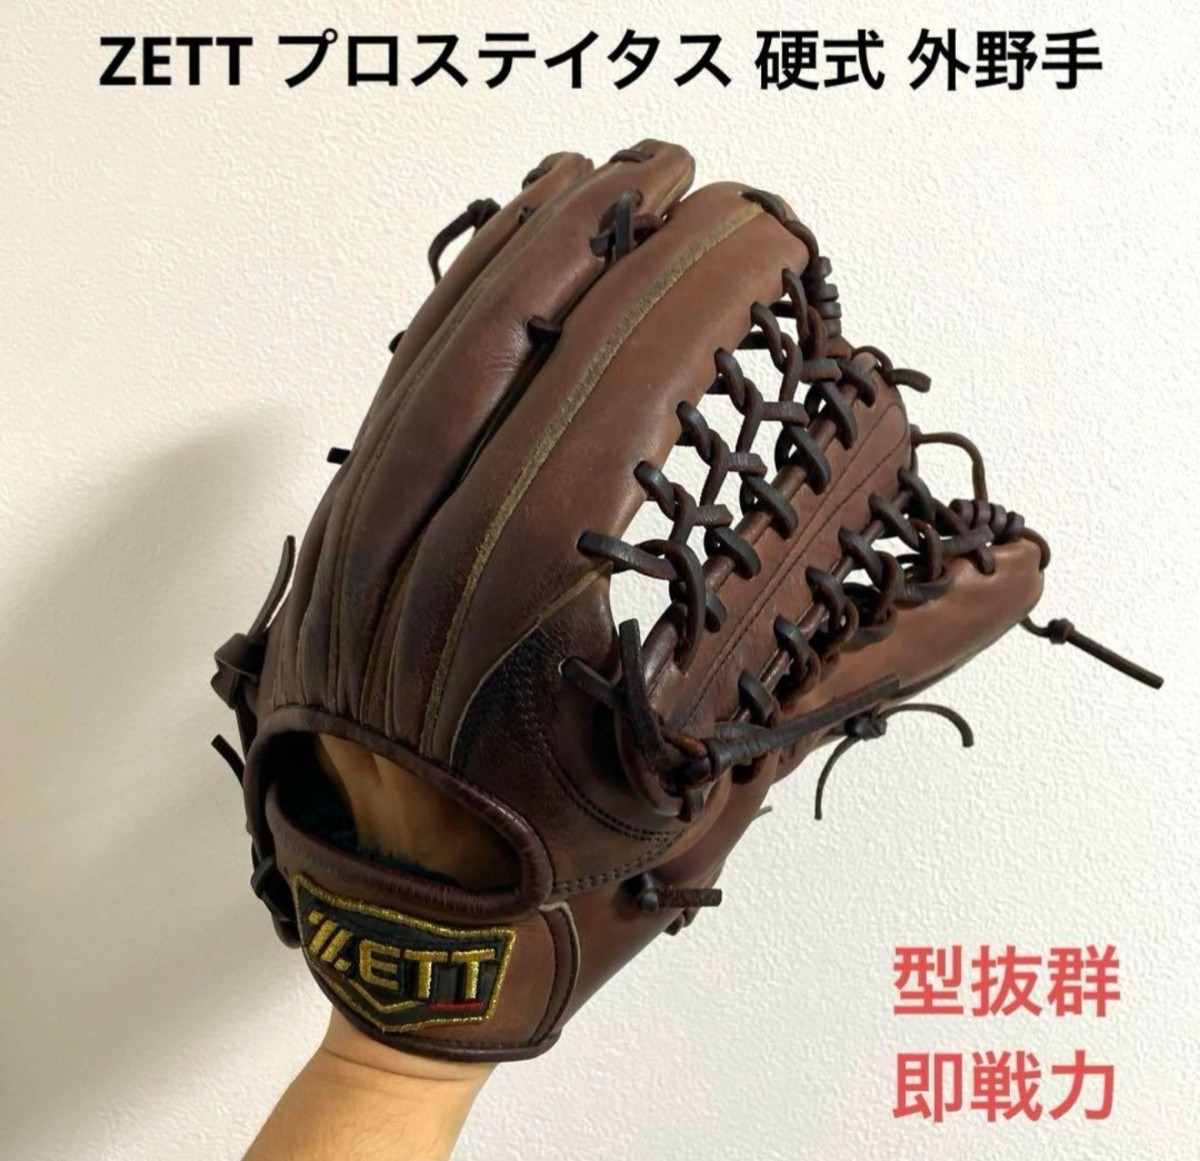 ZETT プロステイタス 型抜群 即戦力 硬式 外野手用グローブ